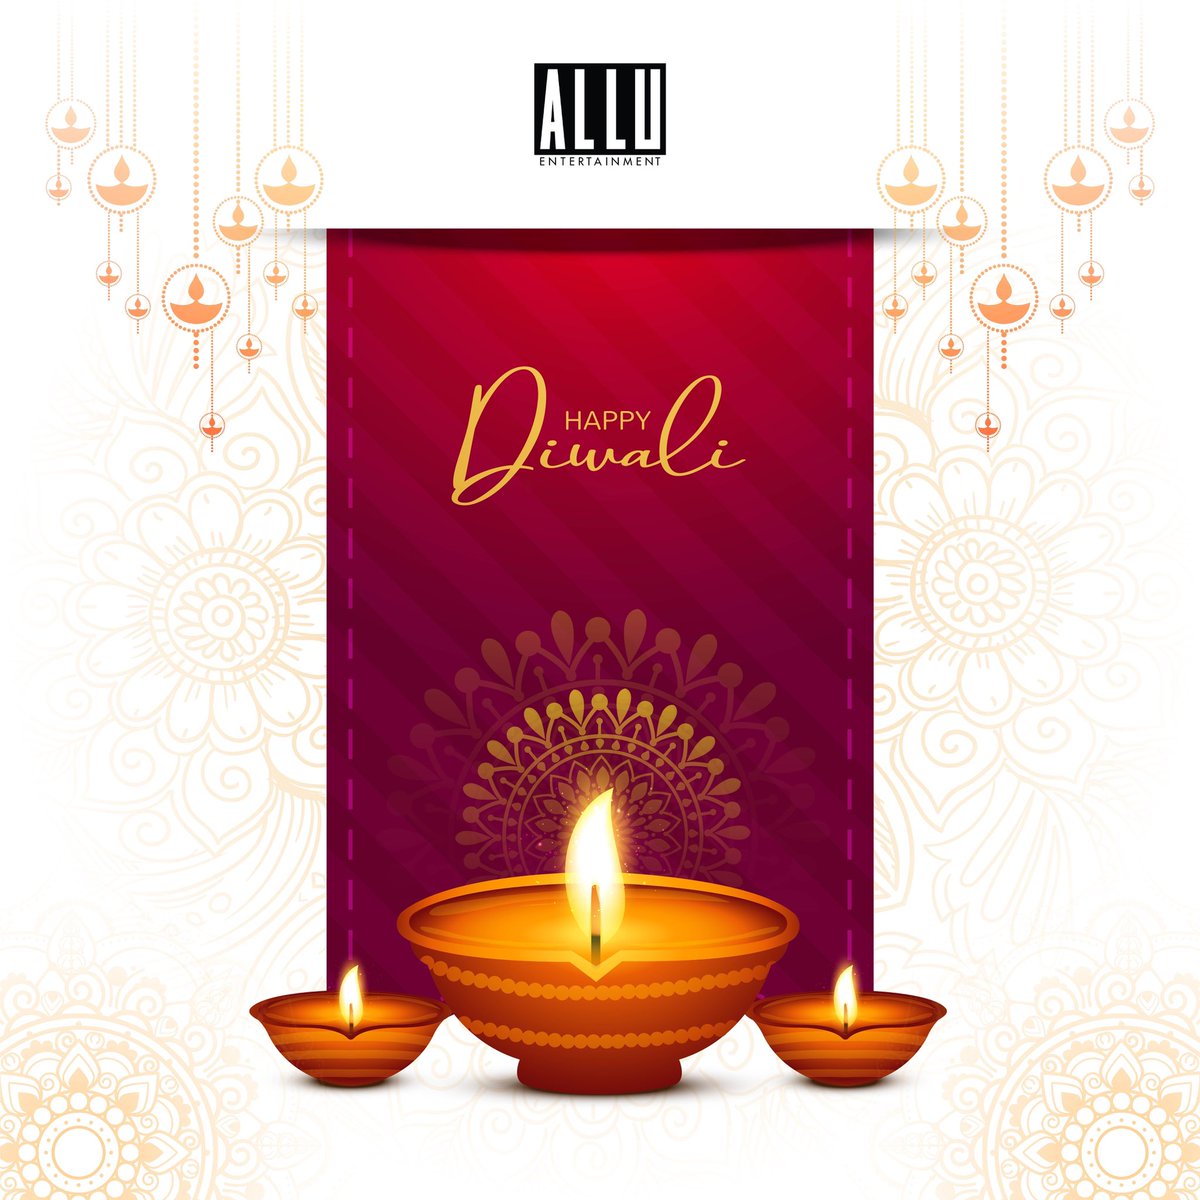 May the festival of lights bring joy & prosperity. Wishing you all a very Happy Diwali! 🎇 #HappyDiwali 🧨